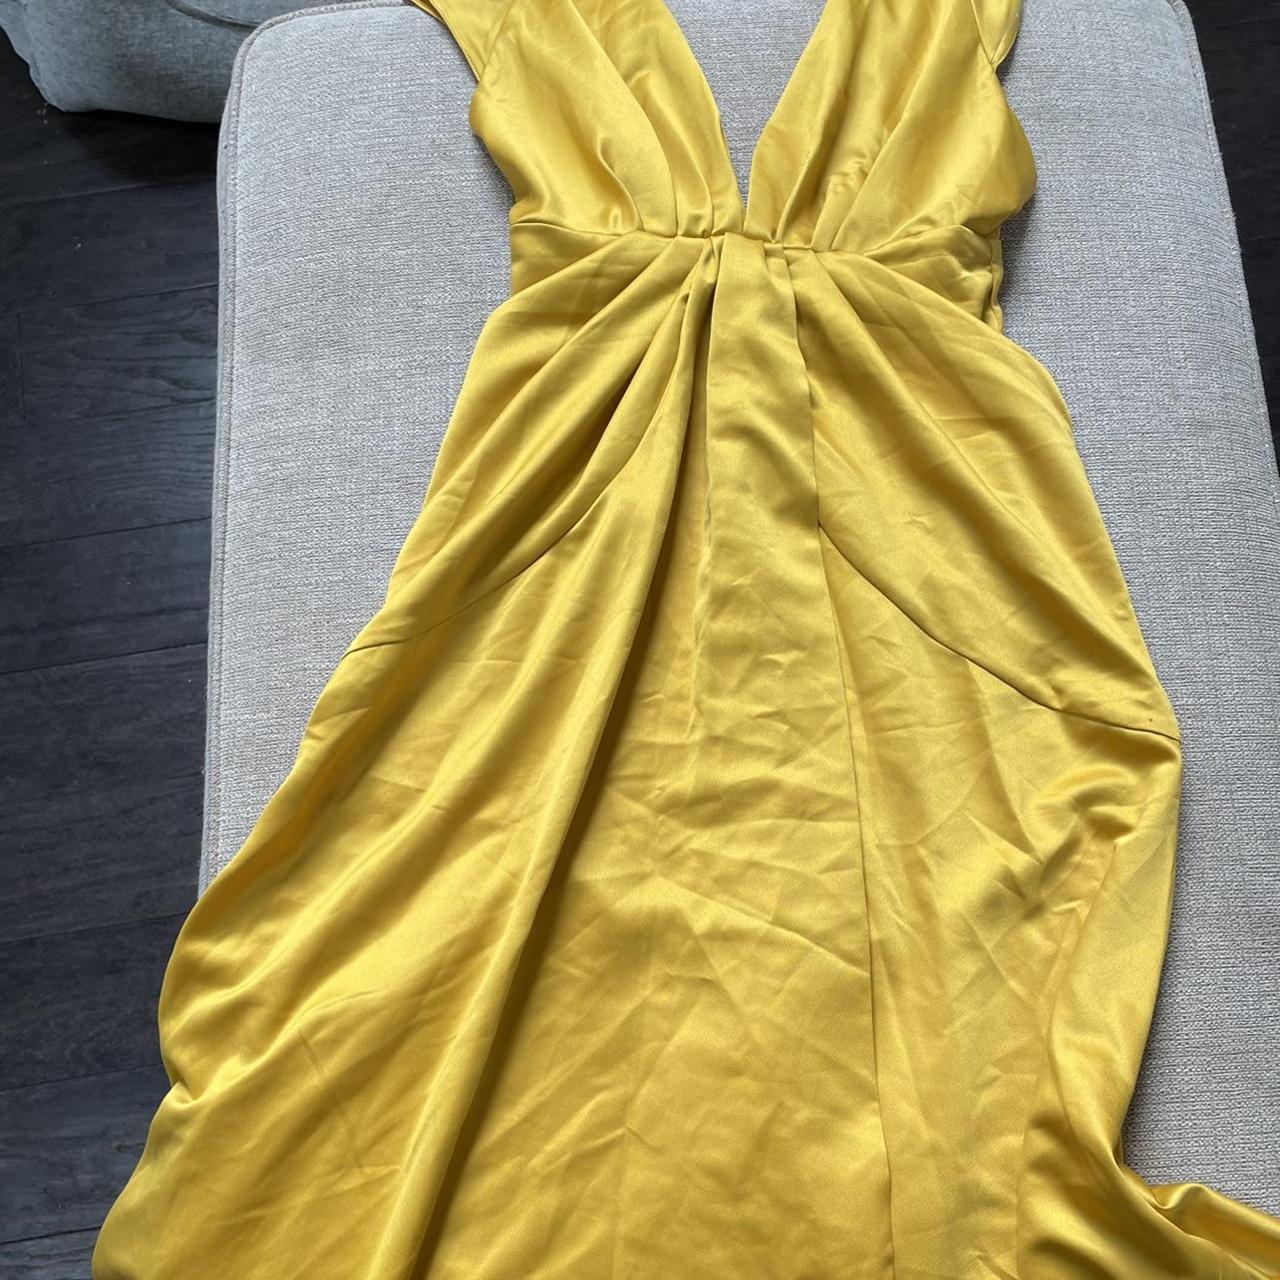 ASOS Women's Yellow and Gold Dress